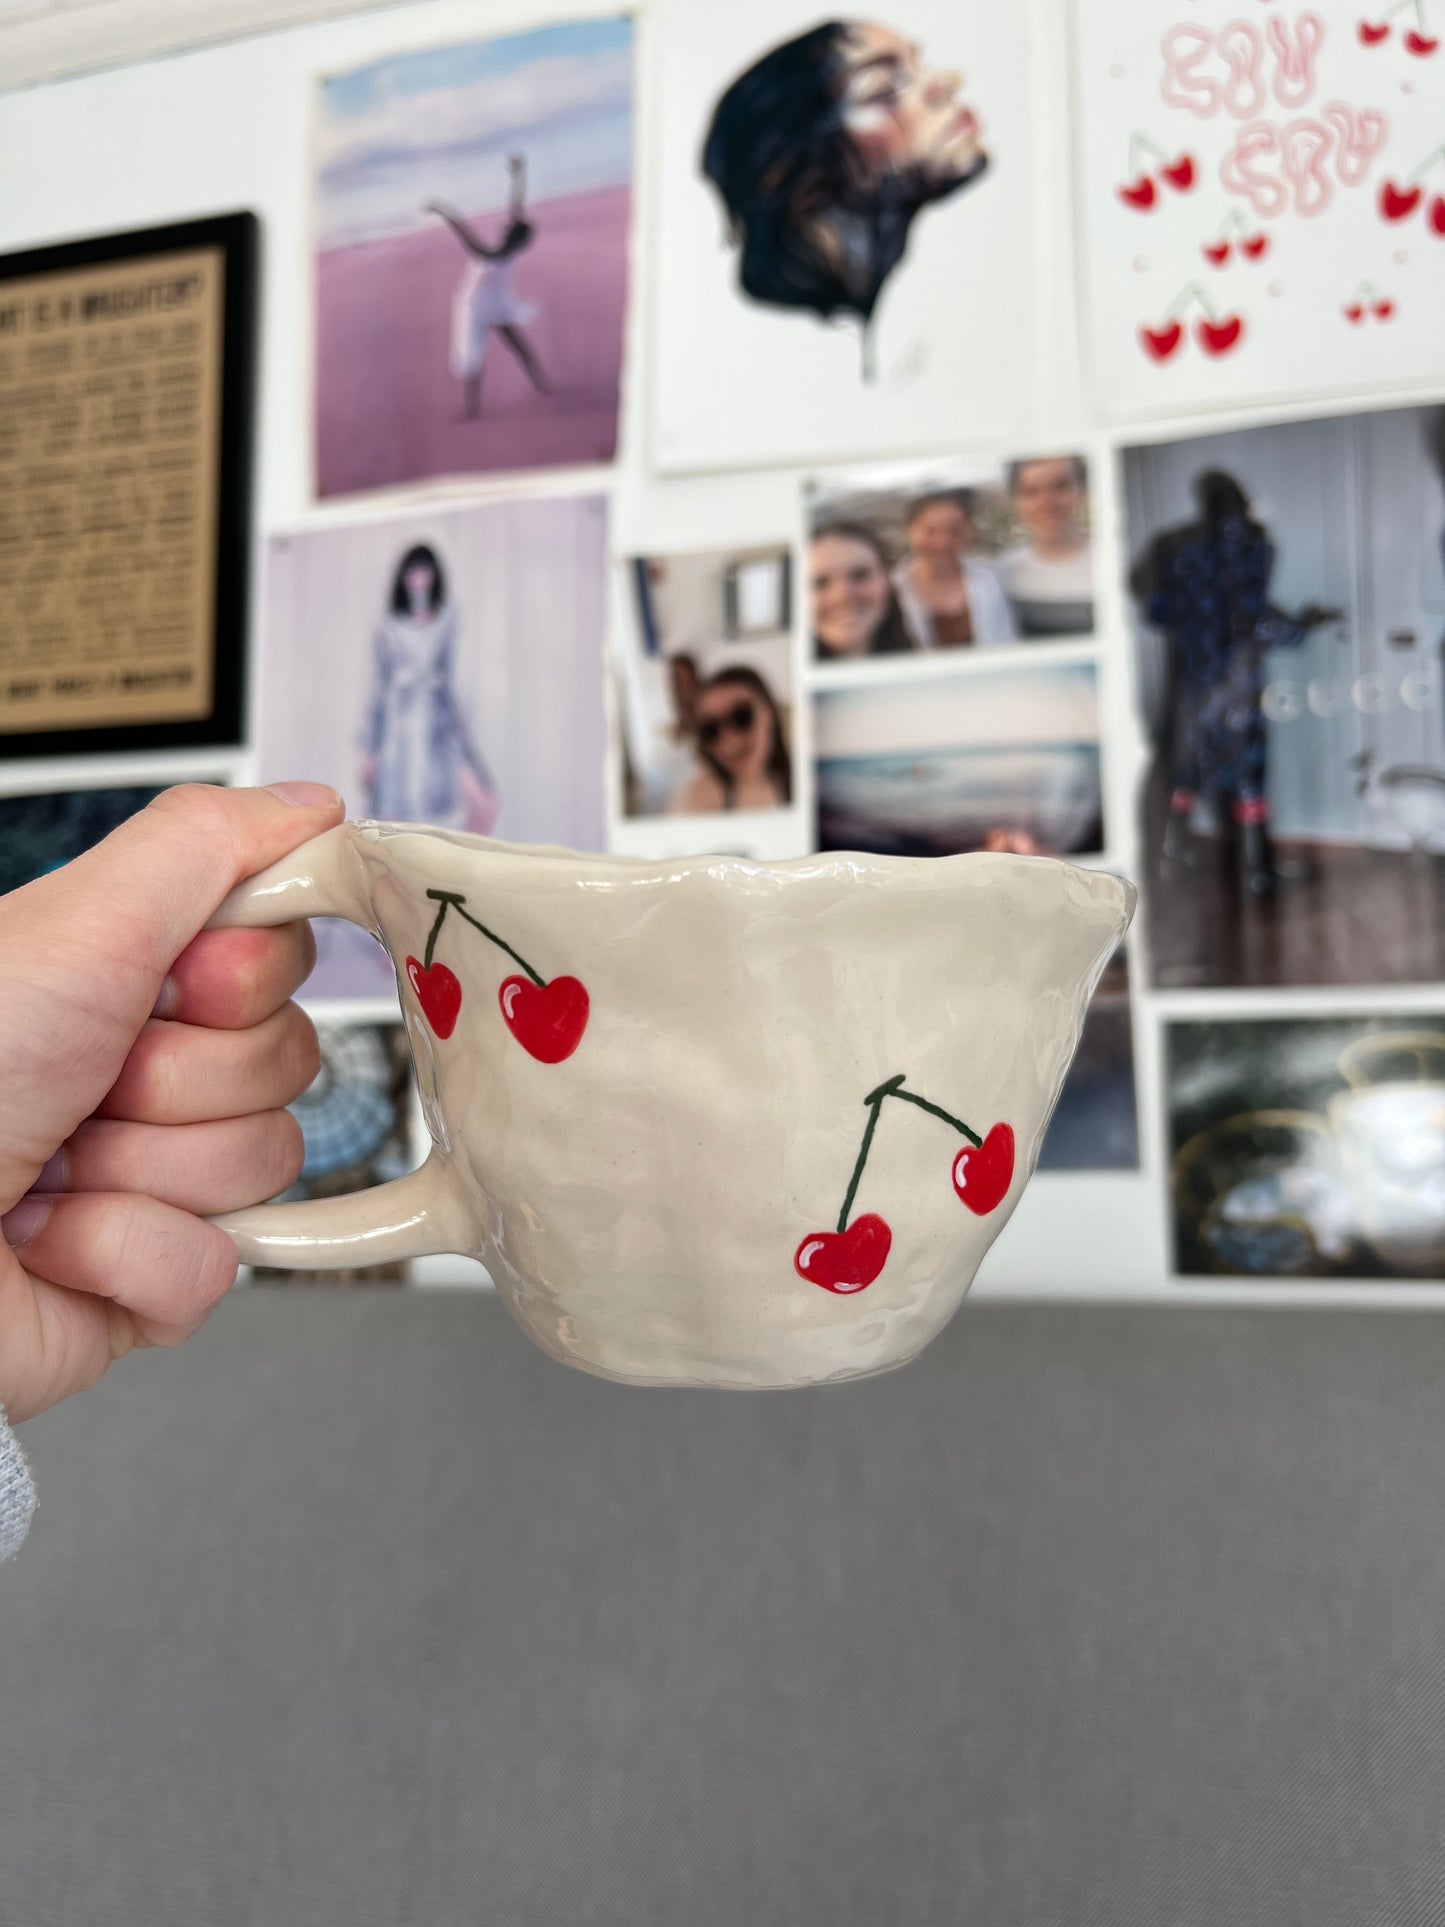 The cherry mug